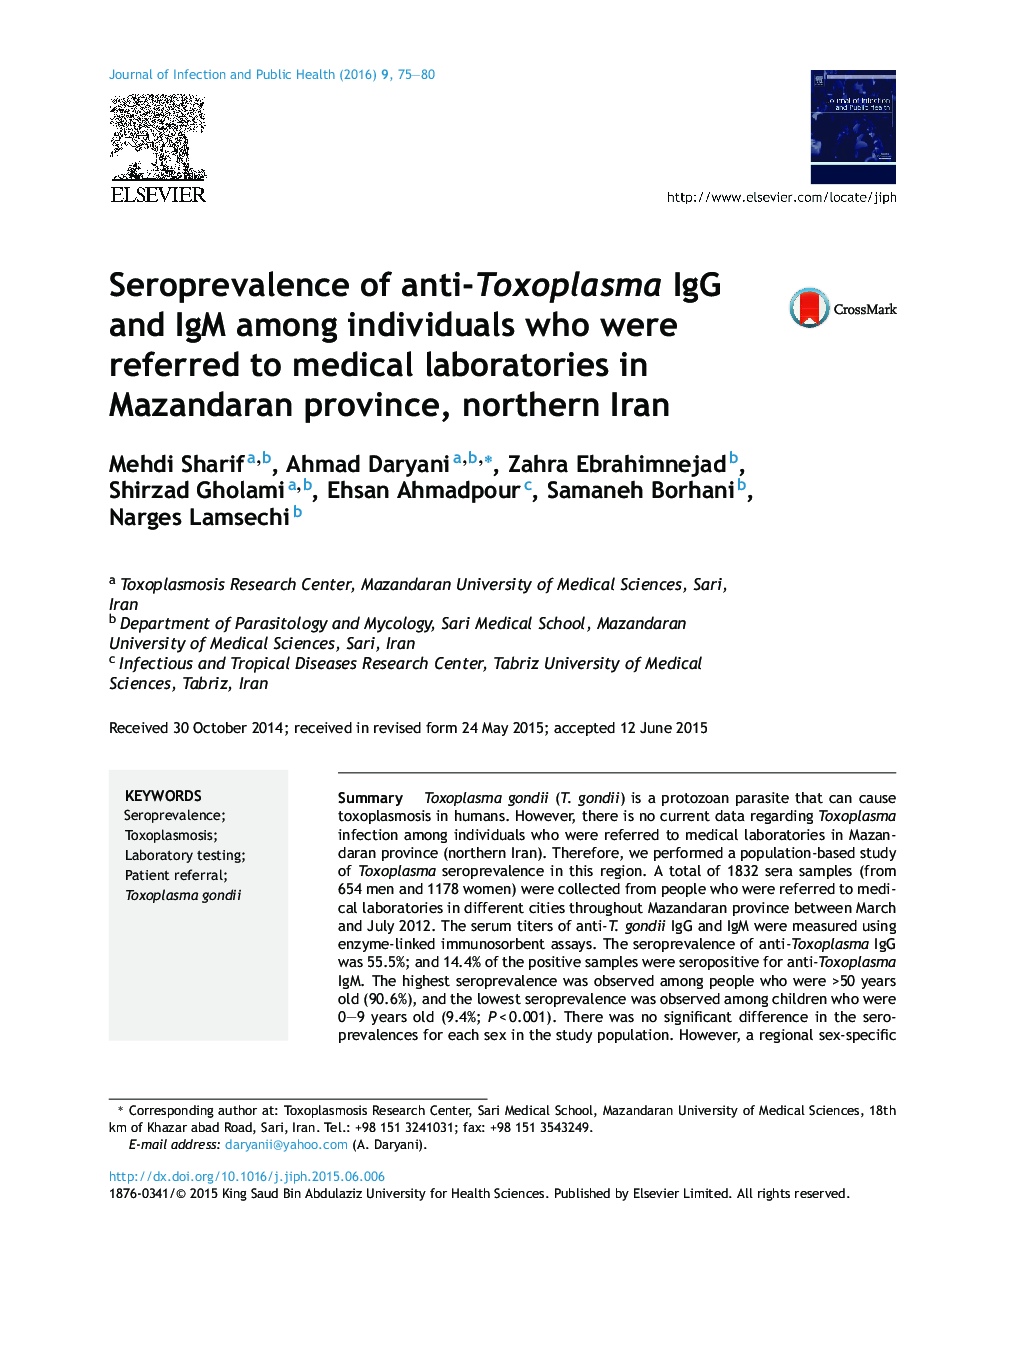 Seroprevalence of anti-Toxoplasma IgG and IgM among individuals who were referred to medical laboratories in Mazandaran province, northern Iran